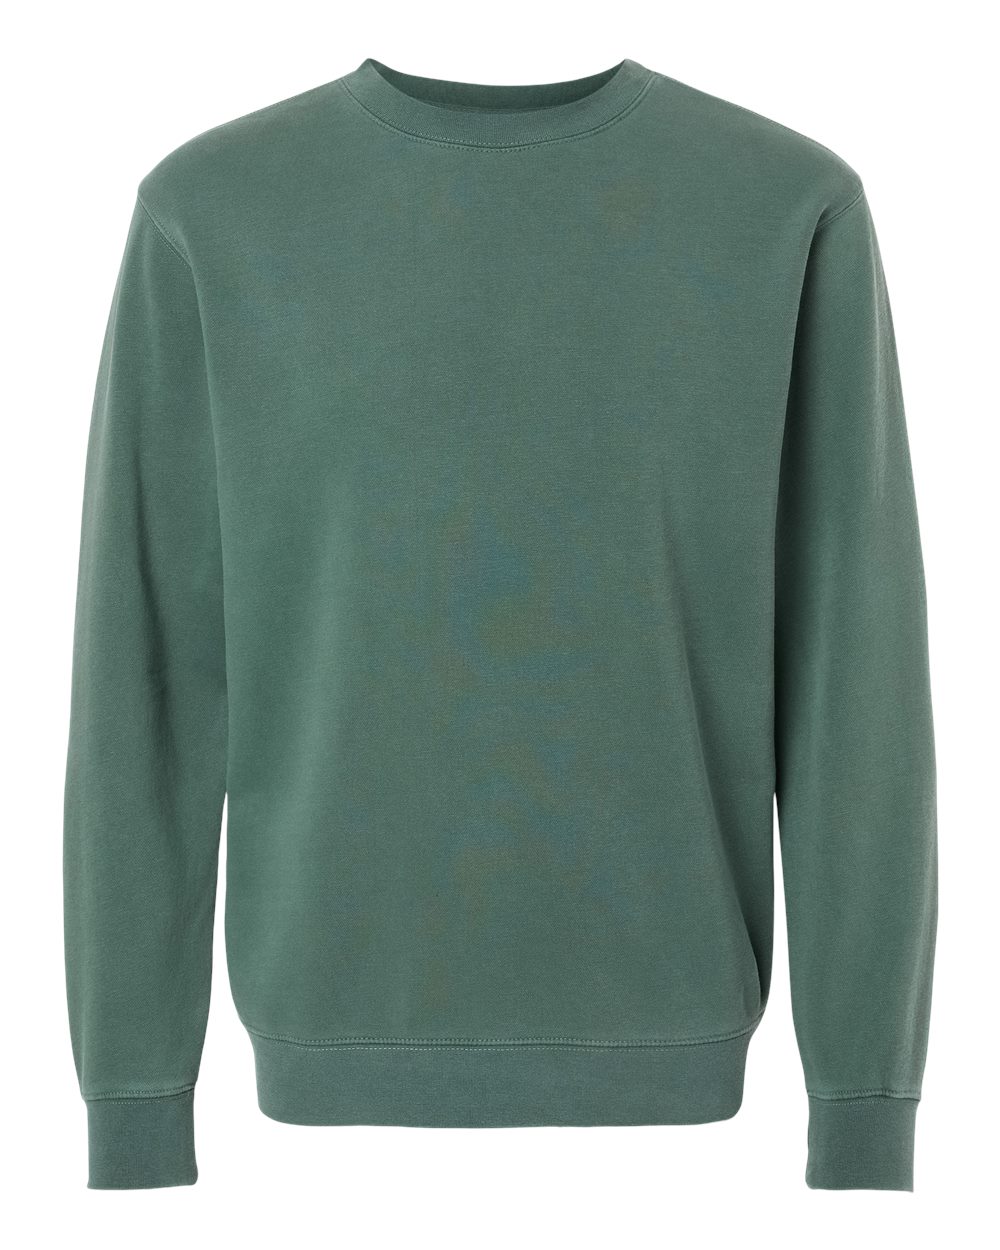 Pigment-Dyed Green Crewneck Sweatshirt (Adult)